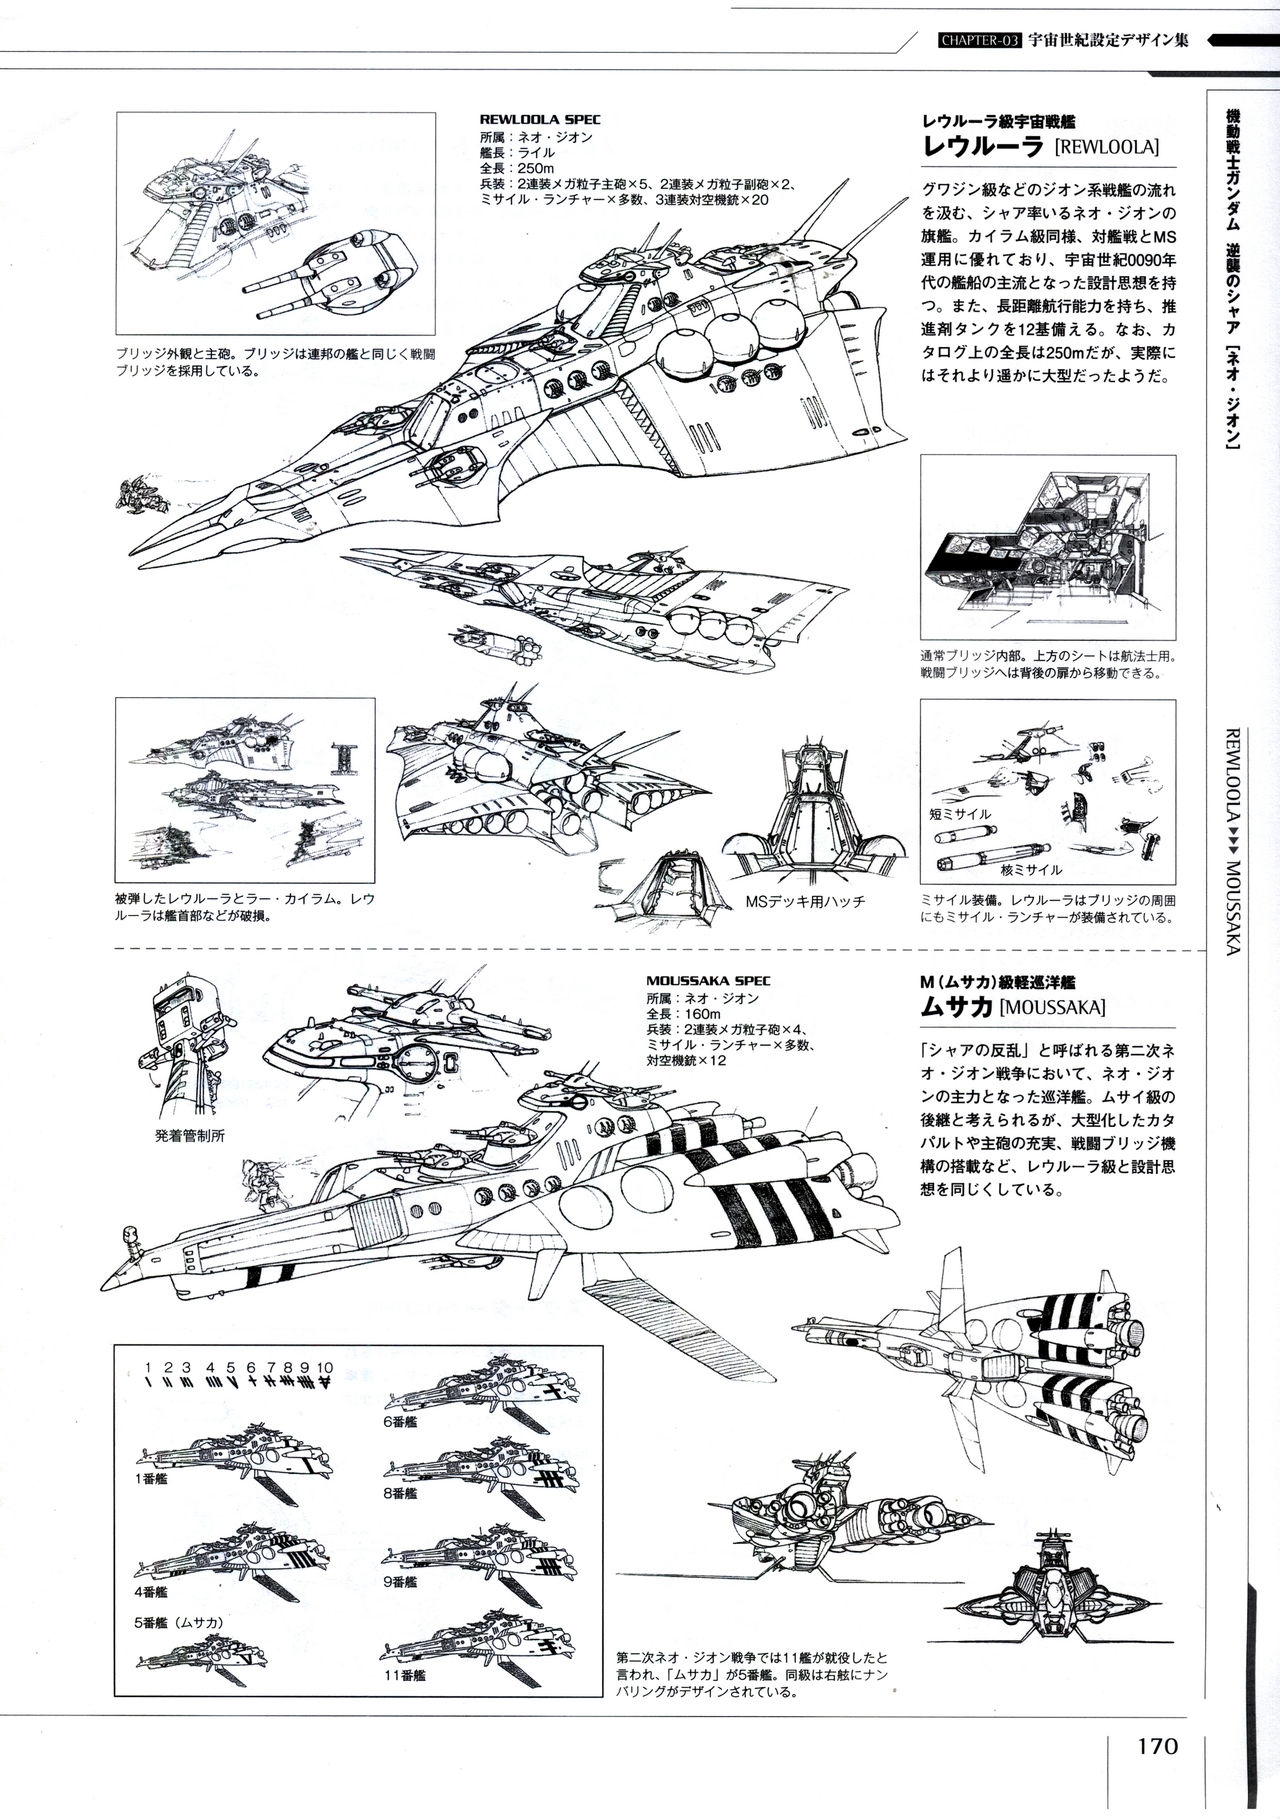 Mobile Suit Gundam - Ship & Aerospace Plane Encyclopedia - Revised Edition 175